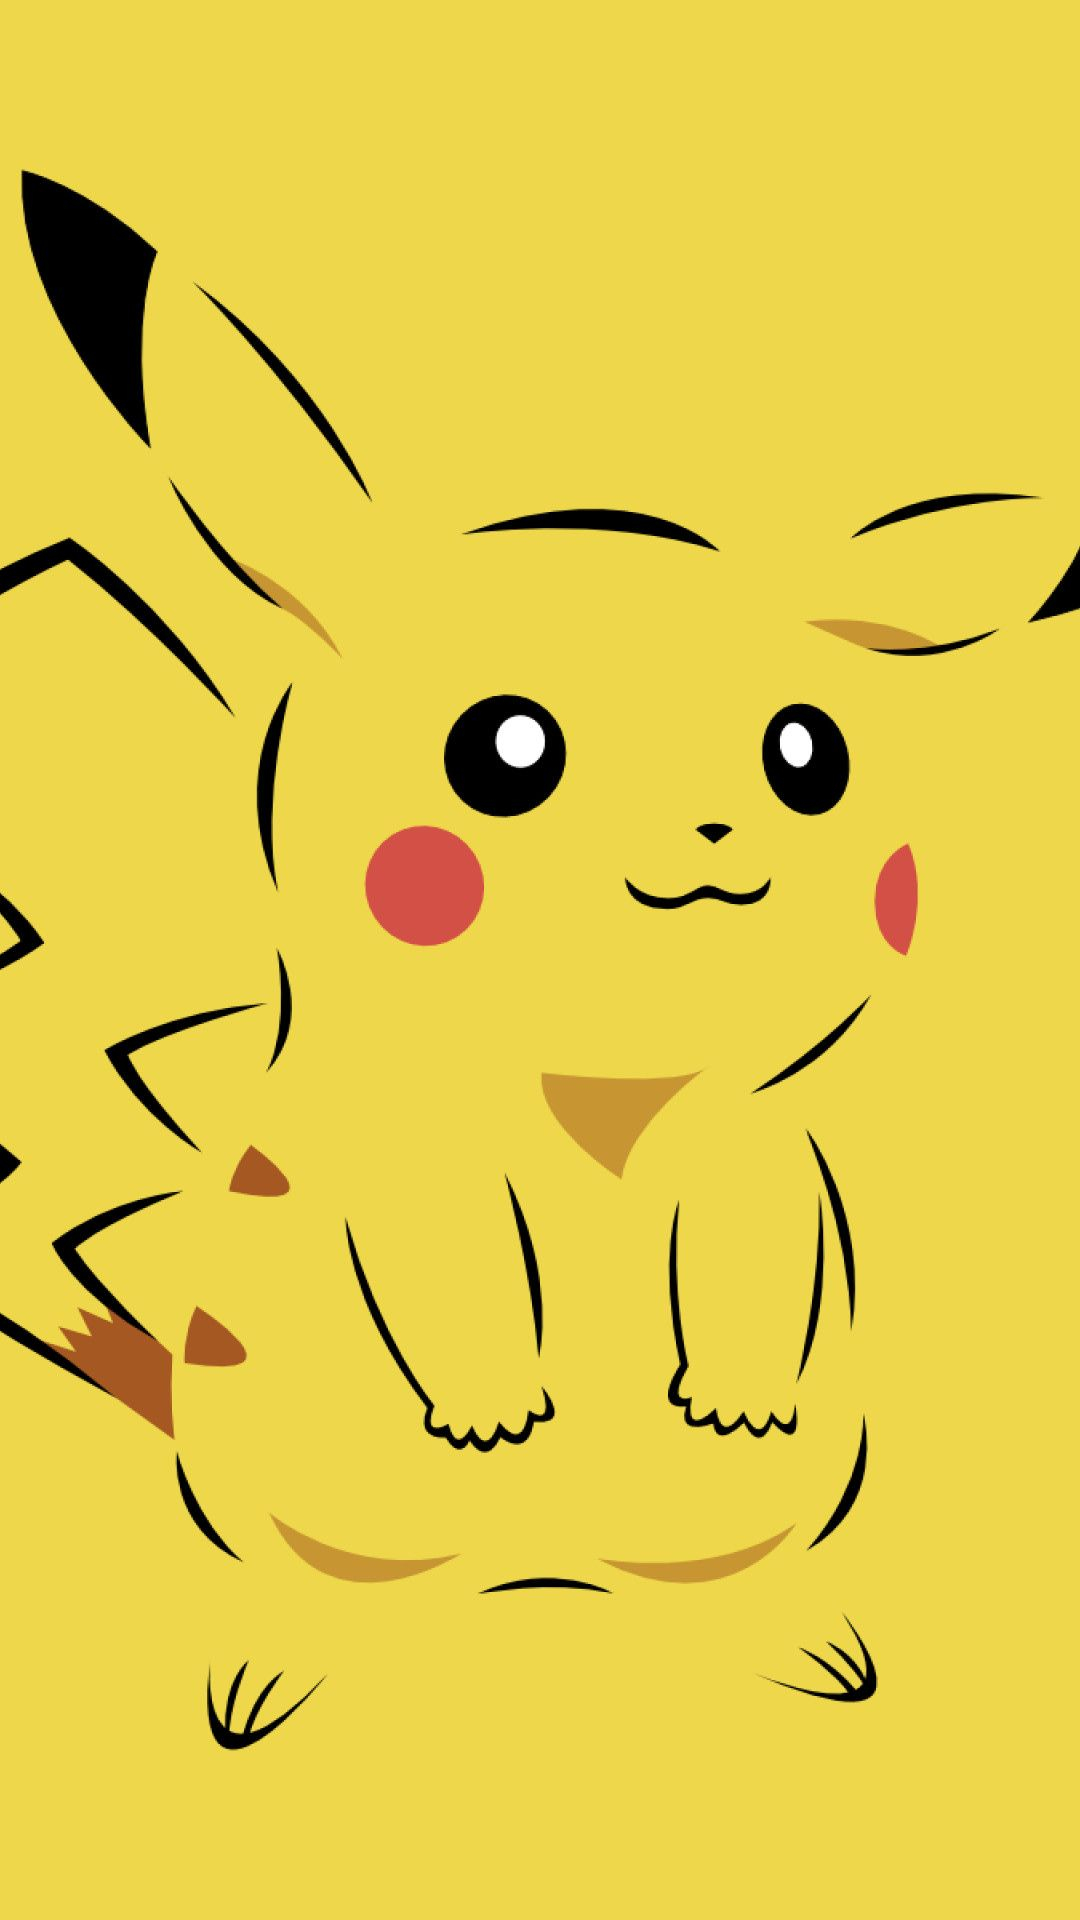 1080x1920 Best Free Pokemon iPhone Wallpapers. | Pikachu wallpaper, Pikachu wallpaper iphone, Pikachu drawing